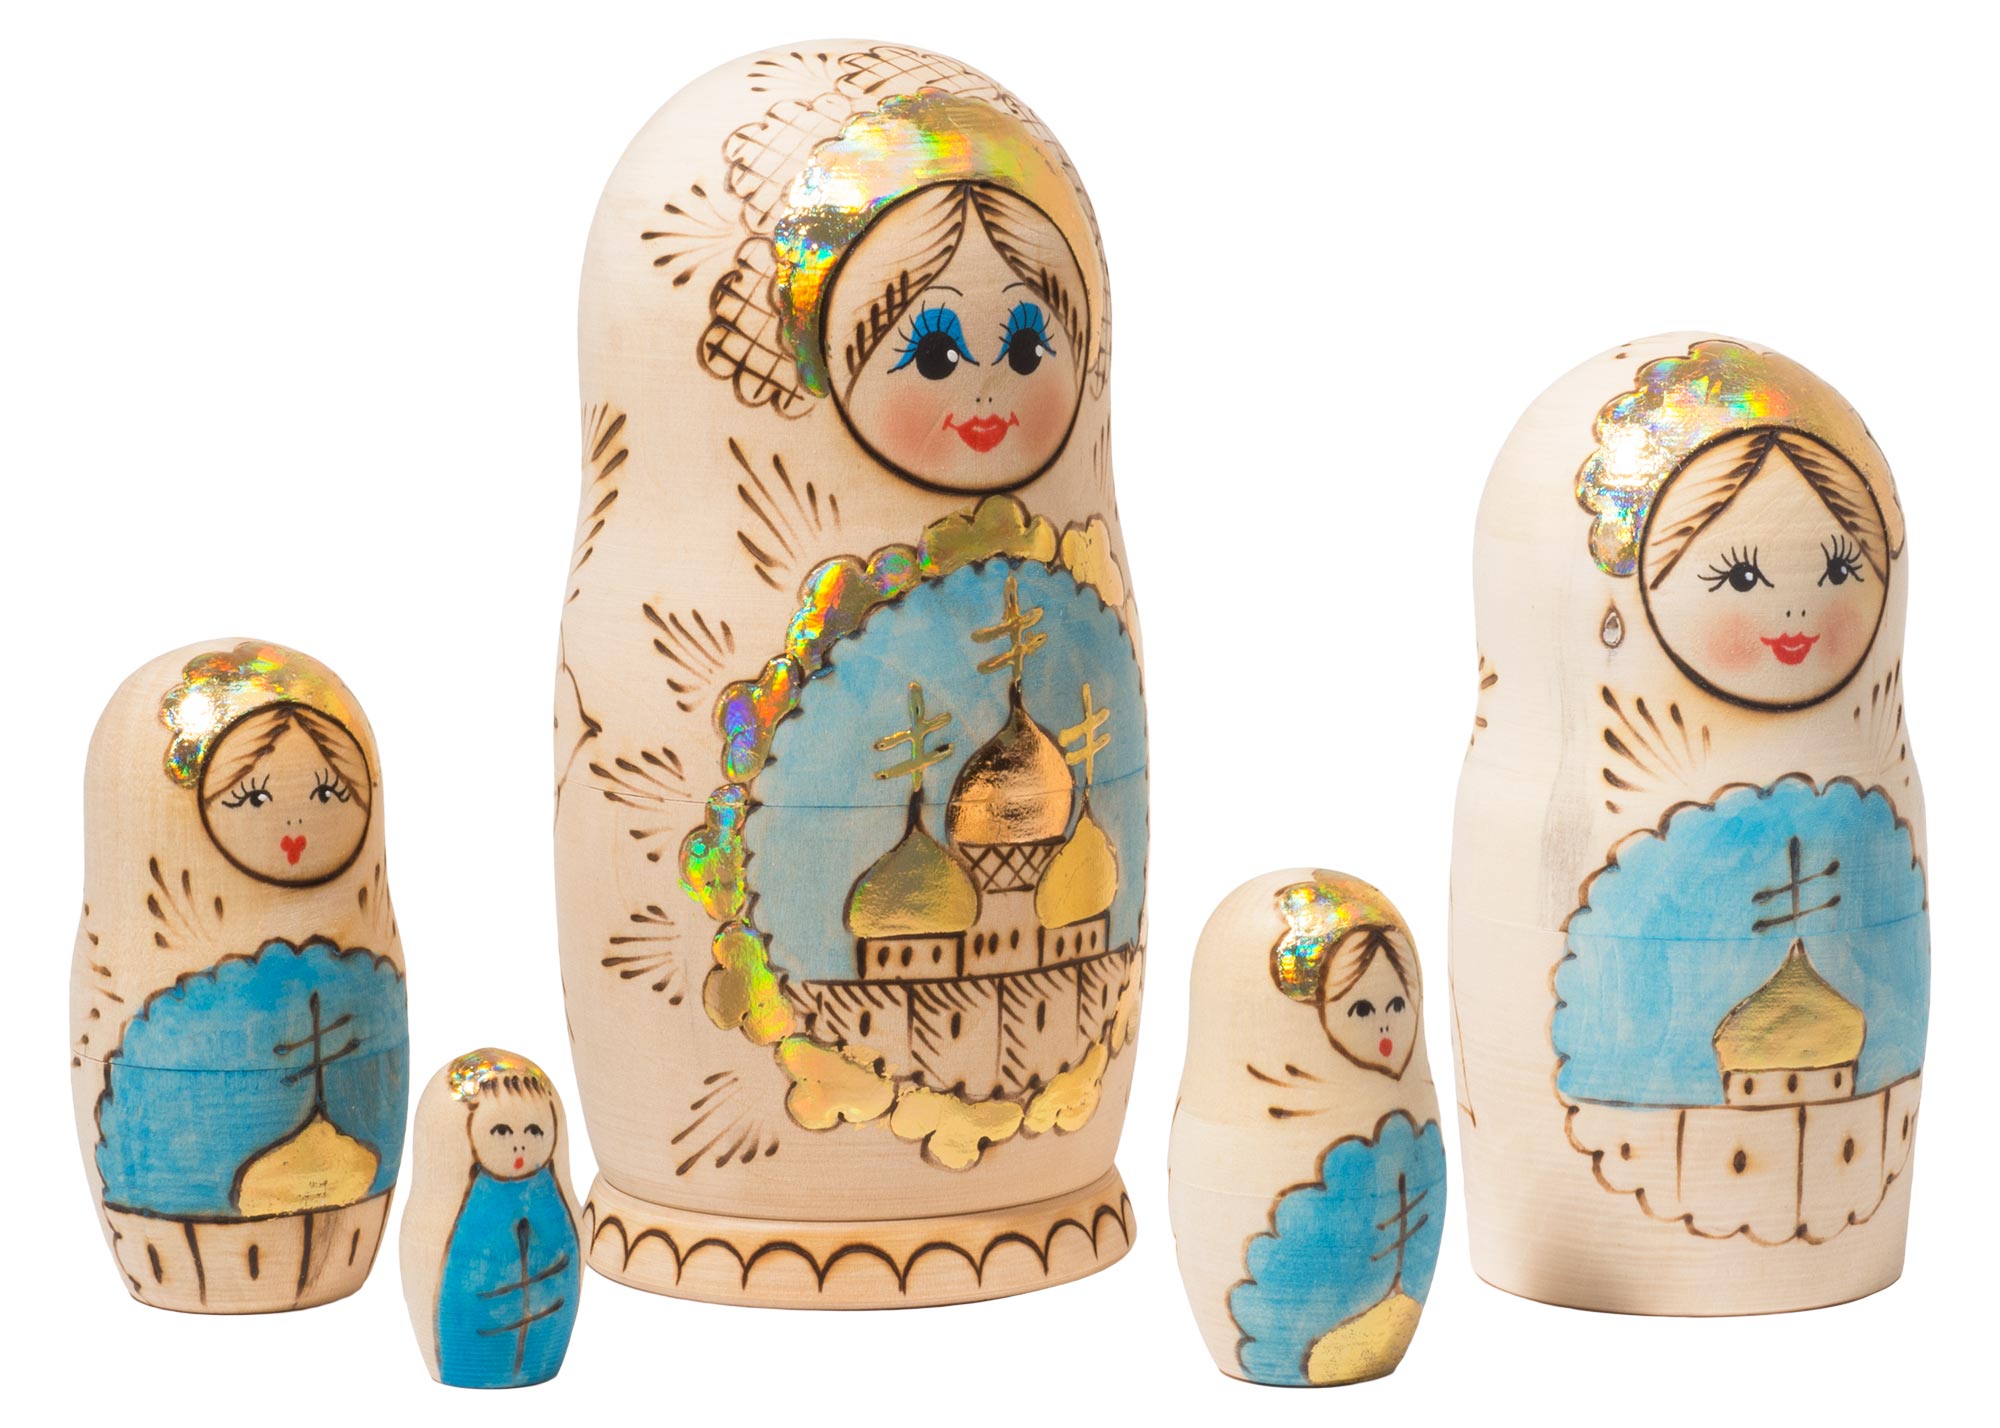 Buy 2nd Quality Woodburned Church Nesting Doll 5pc./5" at GoldenCockerel.com